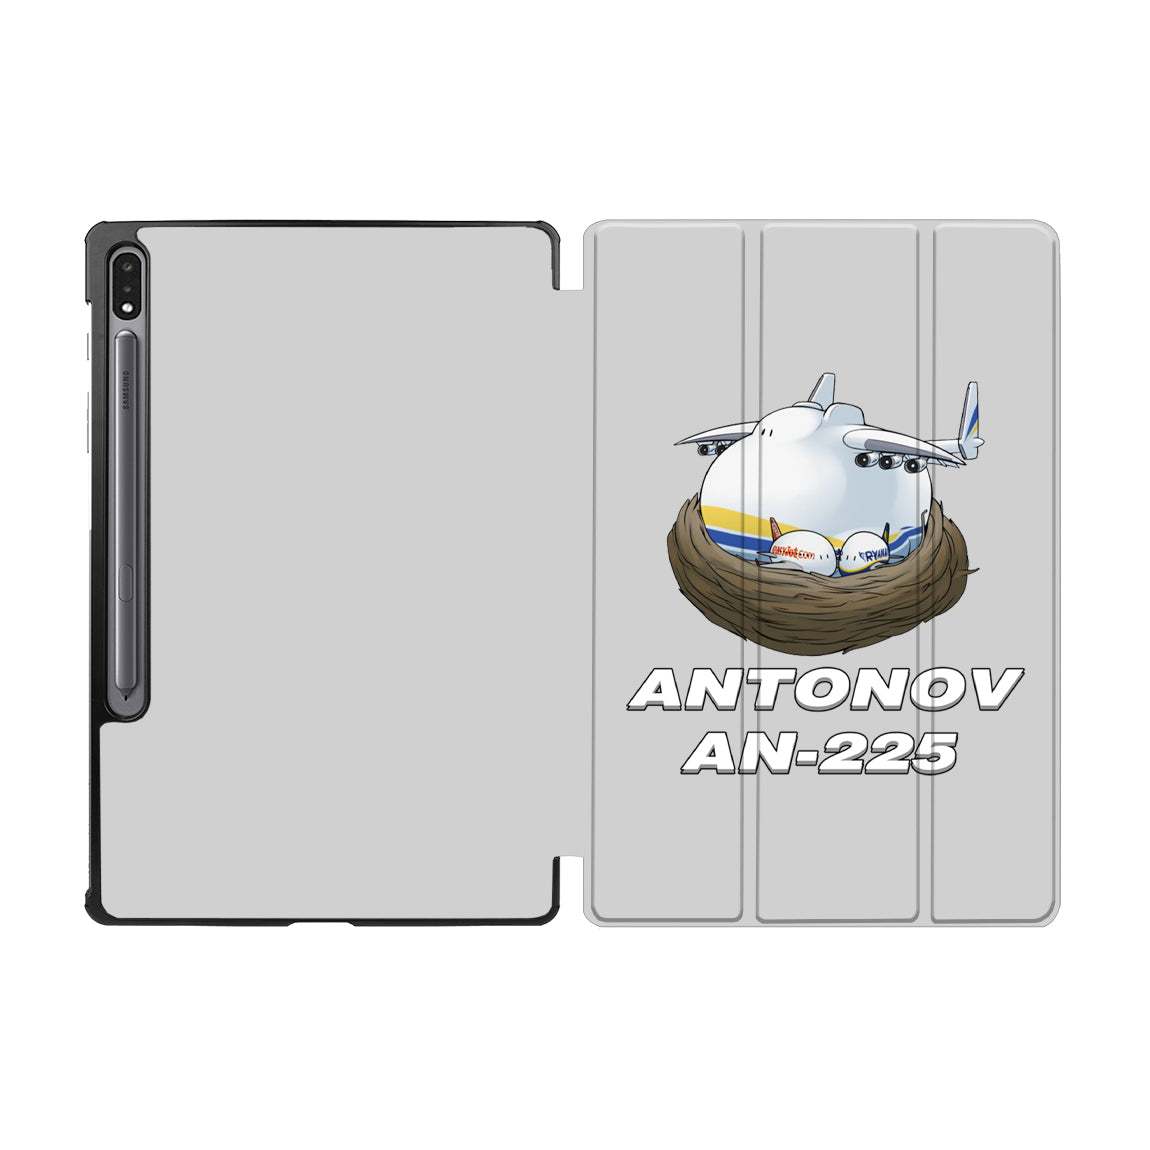 Antonov AN-225 (22) Designed Samsung Tablet Cases